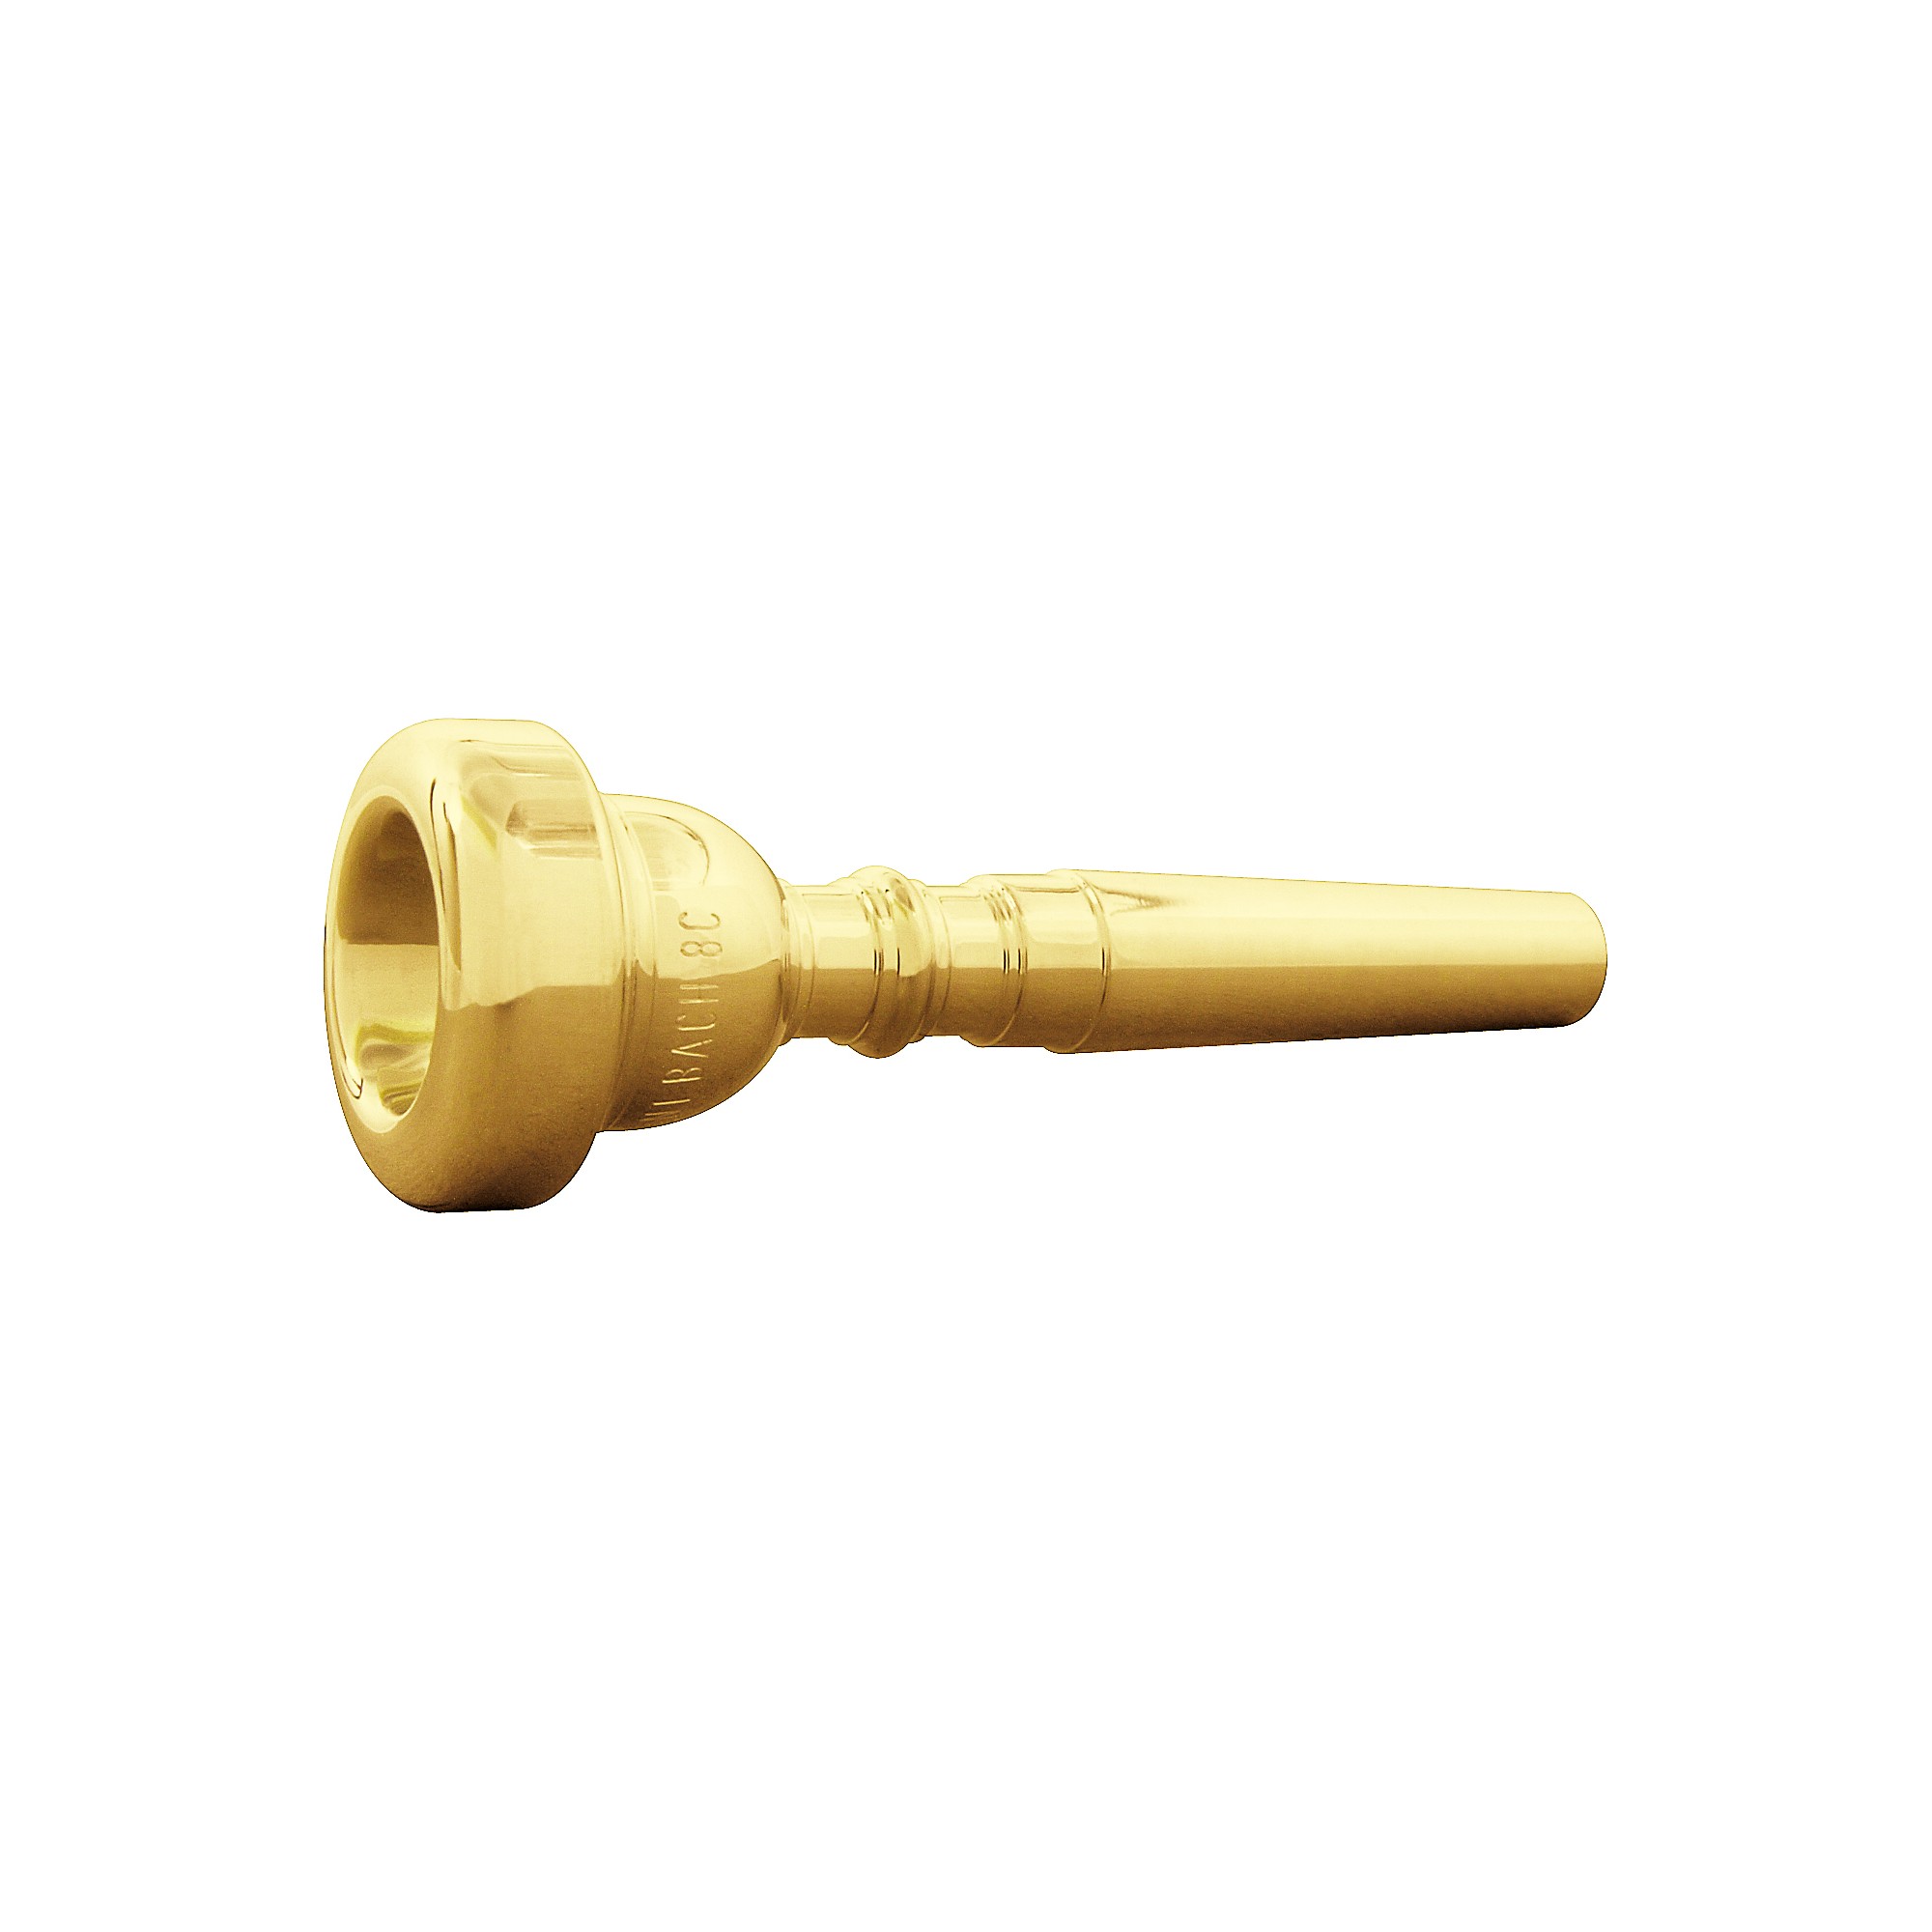 5pcs/set Trumpet Mouthpiece Set 3C/2C/2B/3B with Gold Plating 7